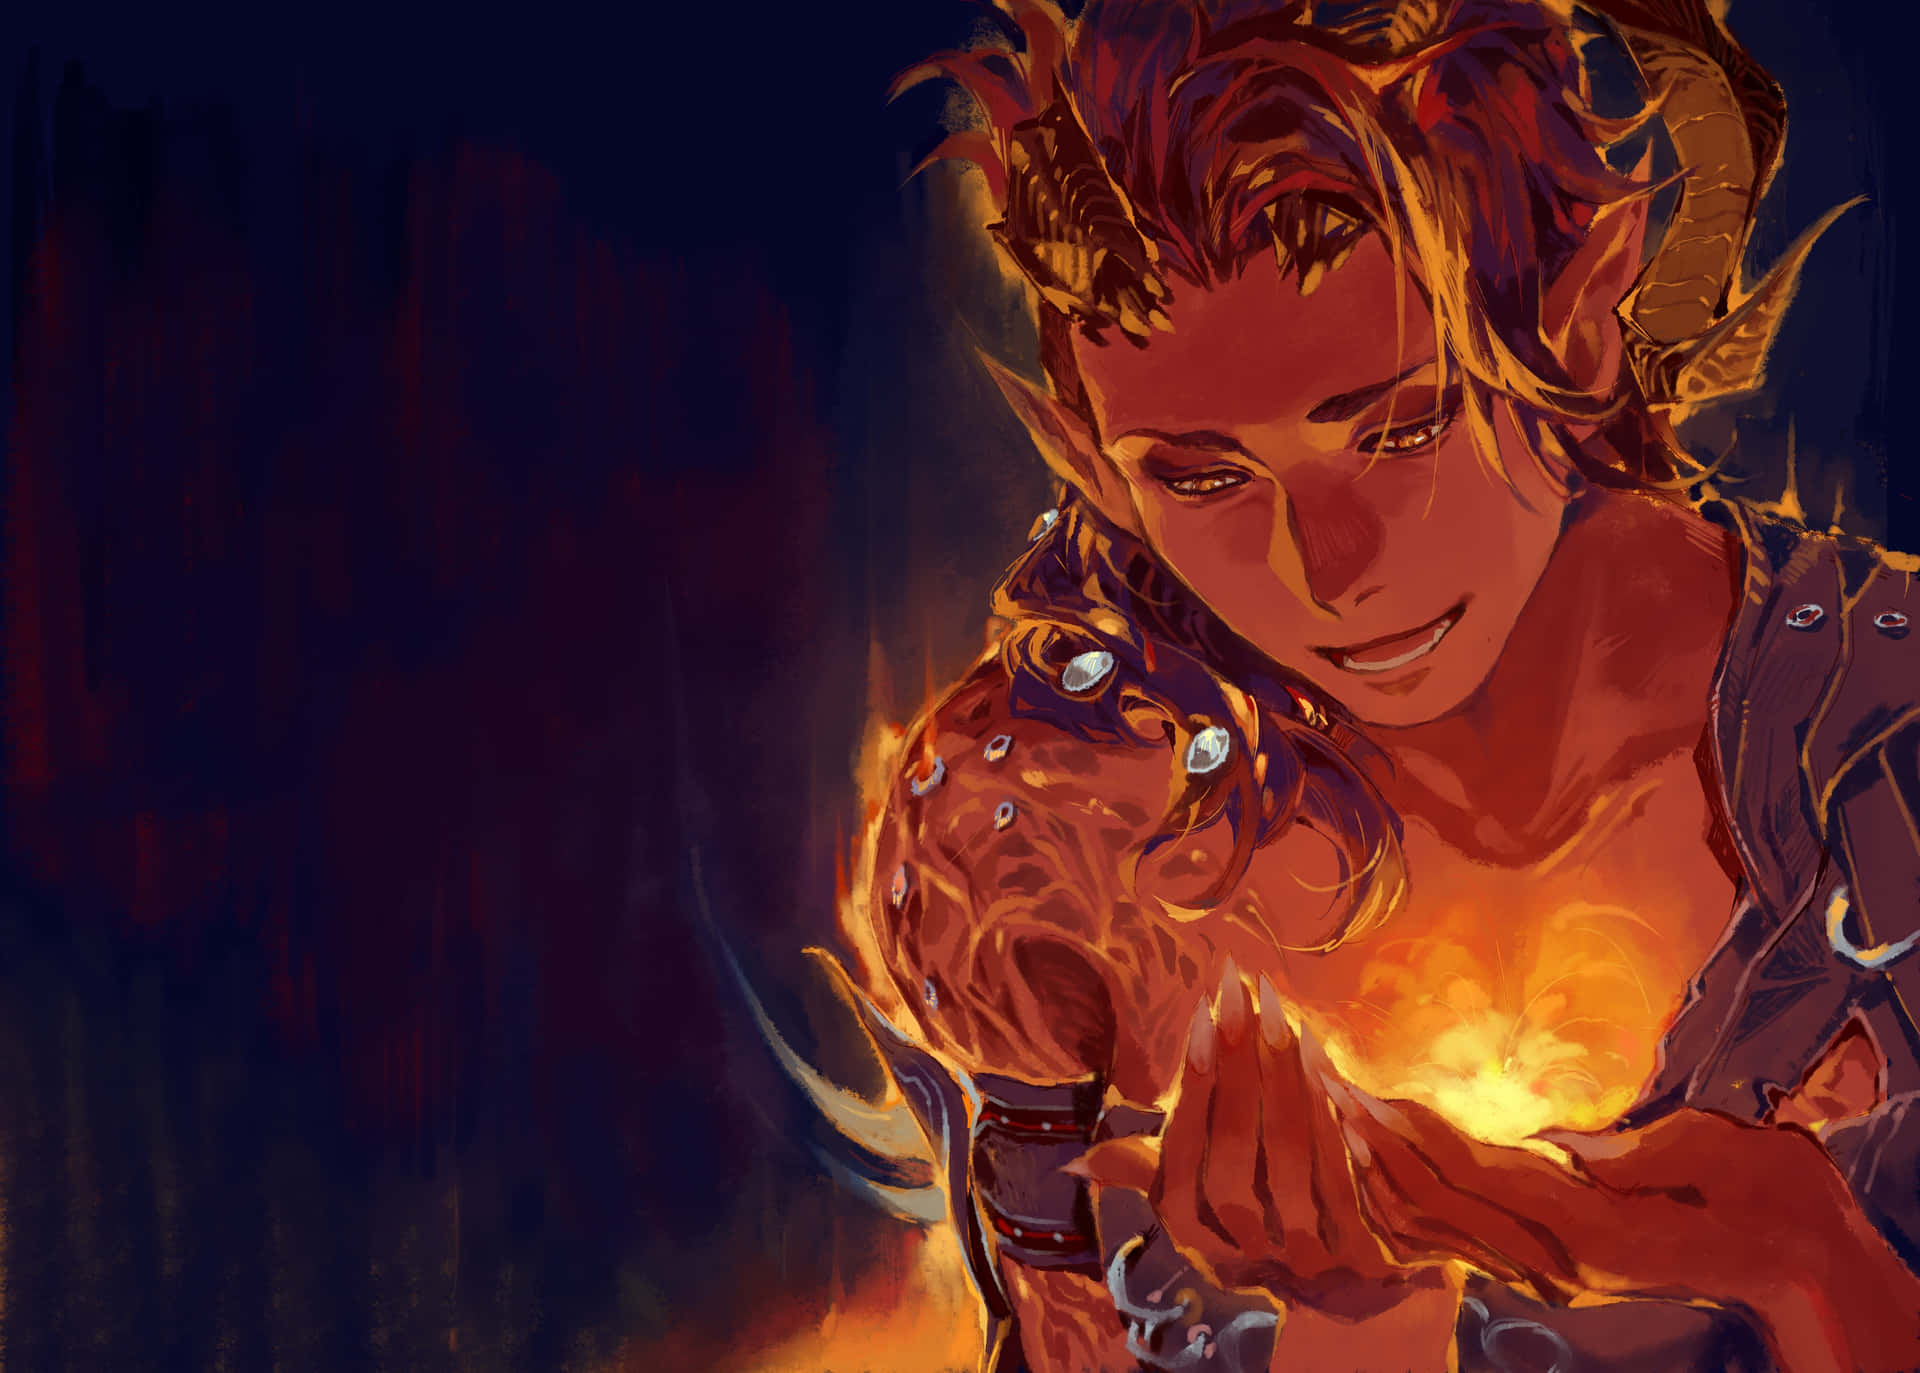 Fiery Eyed Fantasy Character Art Wallpaper